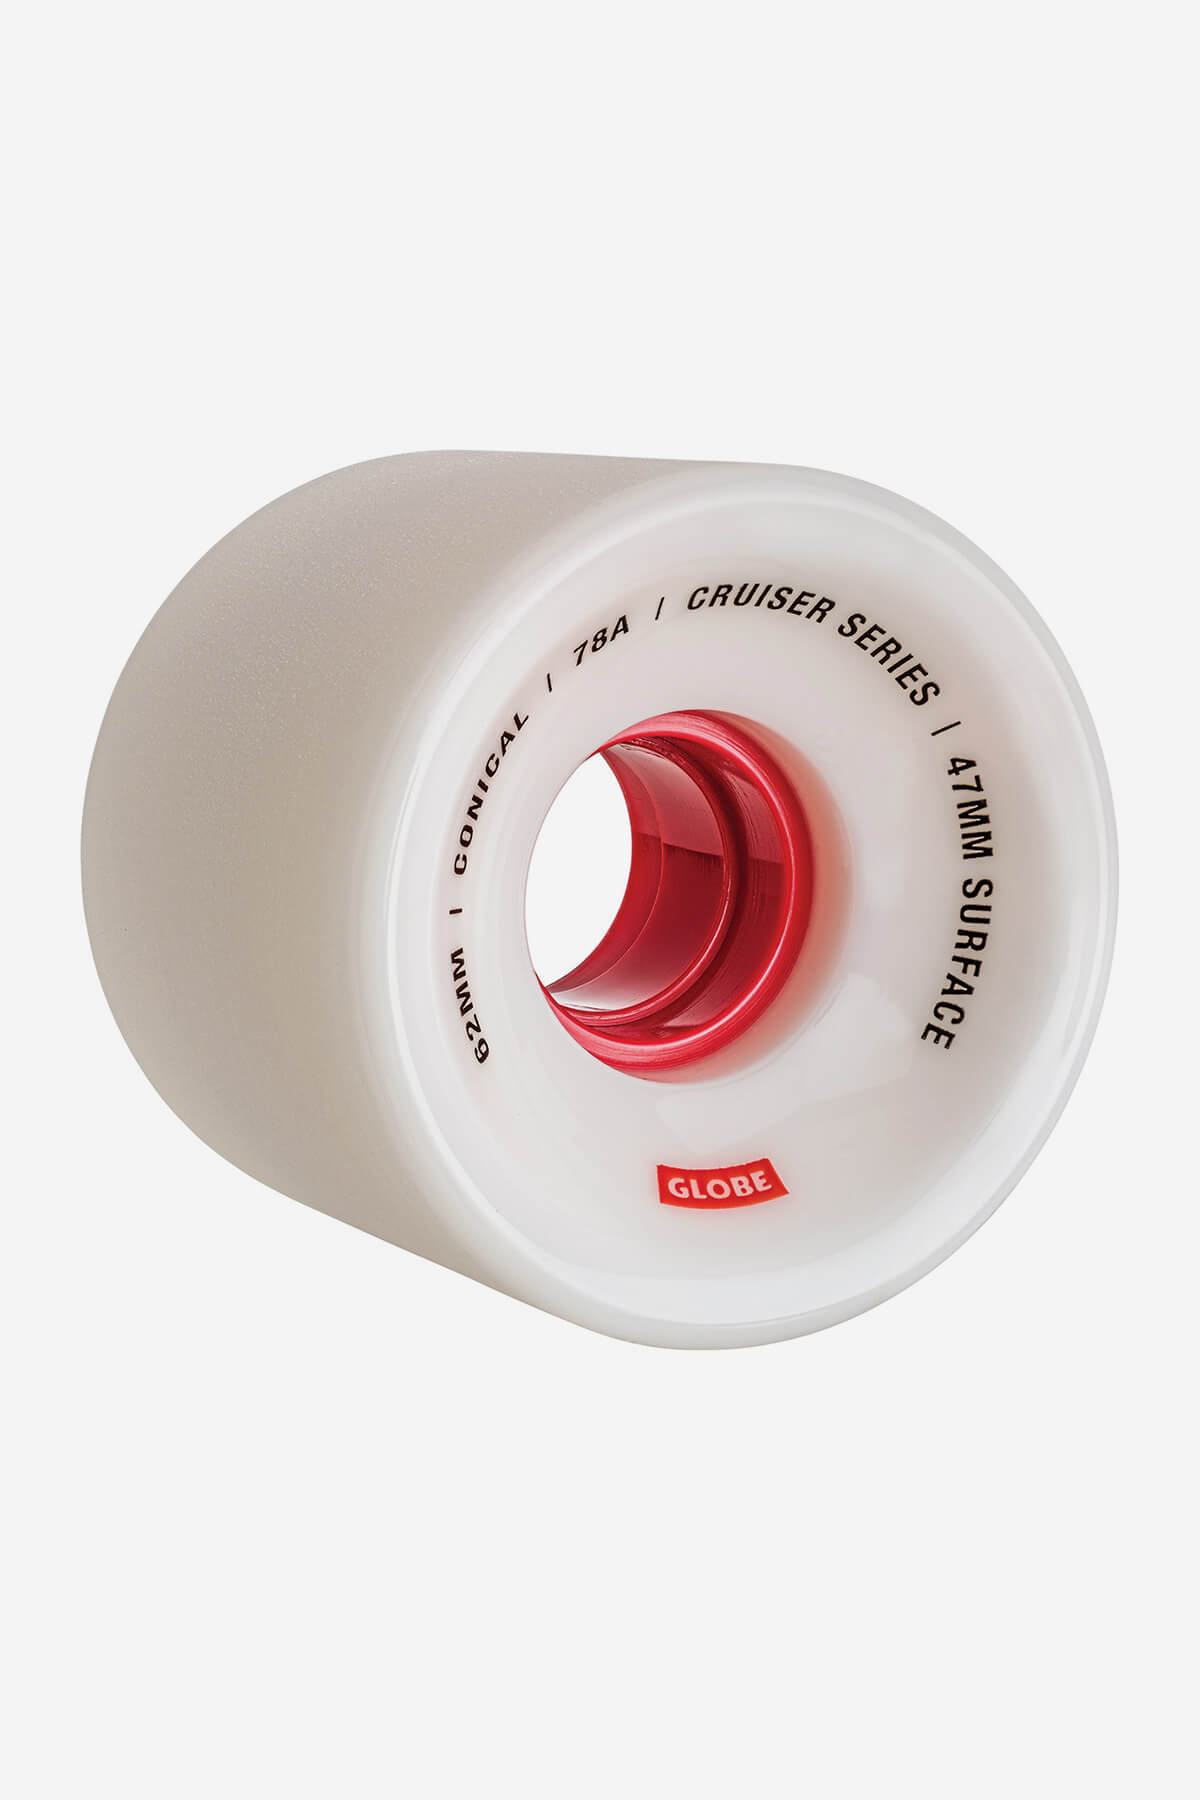 Globe Ruote coniche Cruiser Skateboard  Wheel  62 mm in White/Red/62